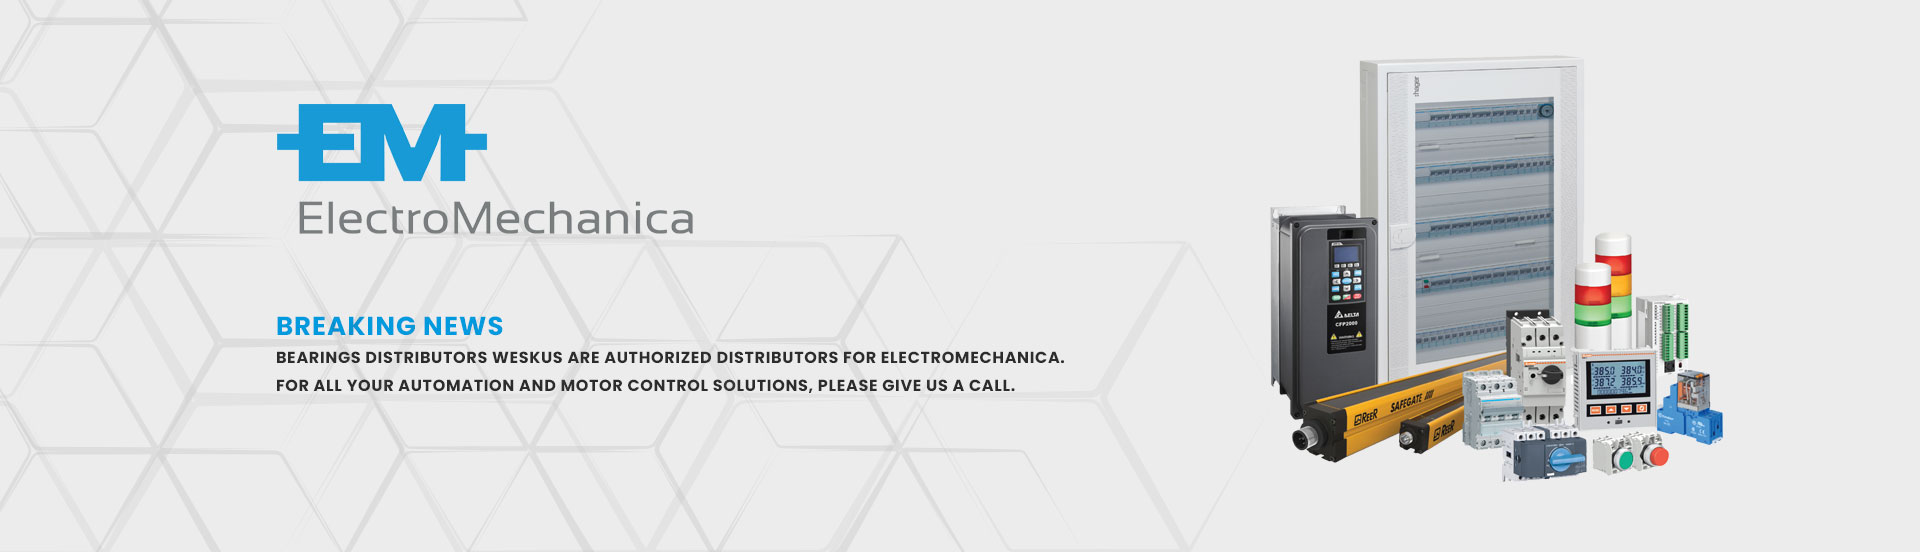 BD Weksus is a distributor of EM ElectroMechanica